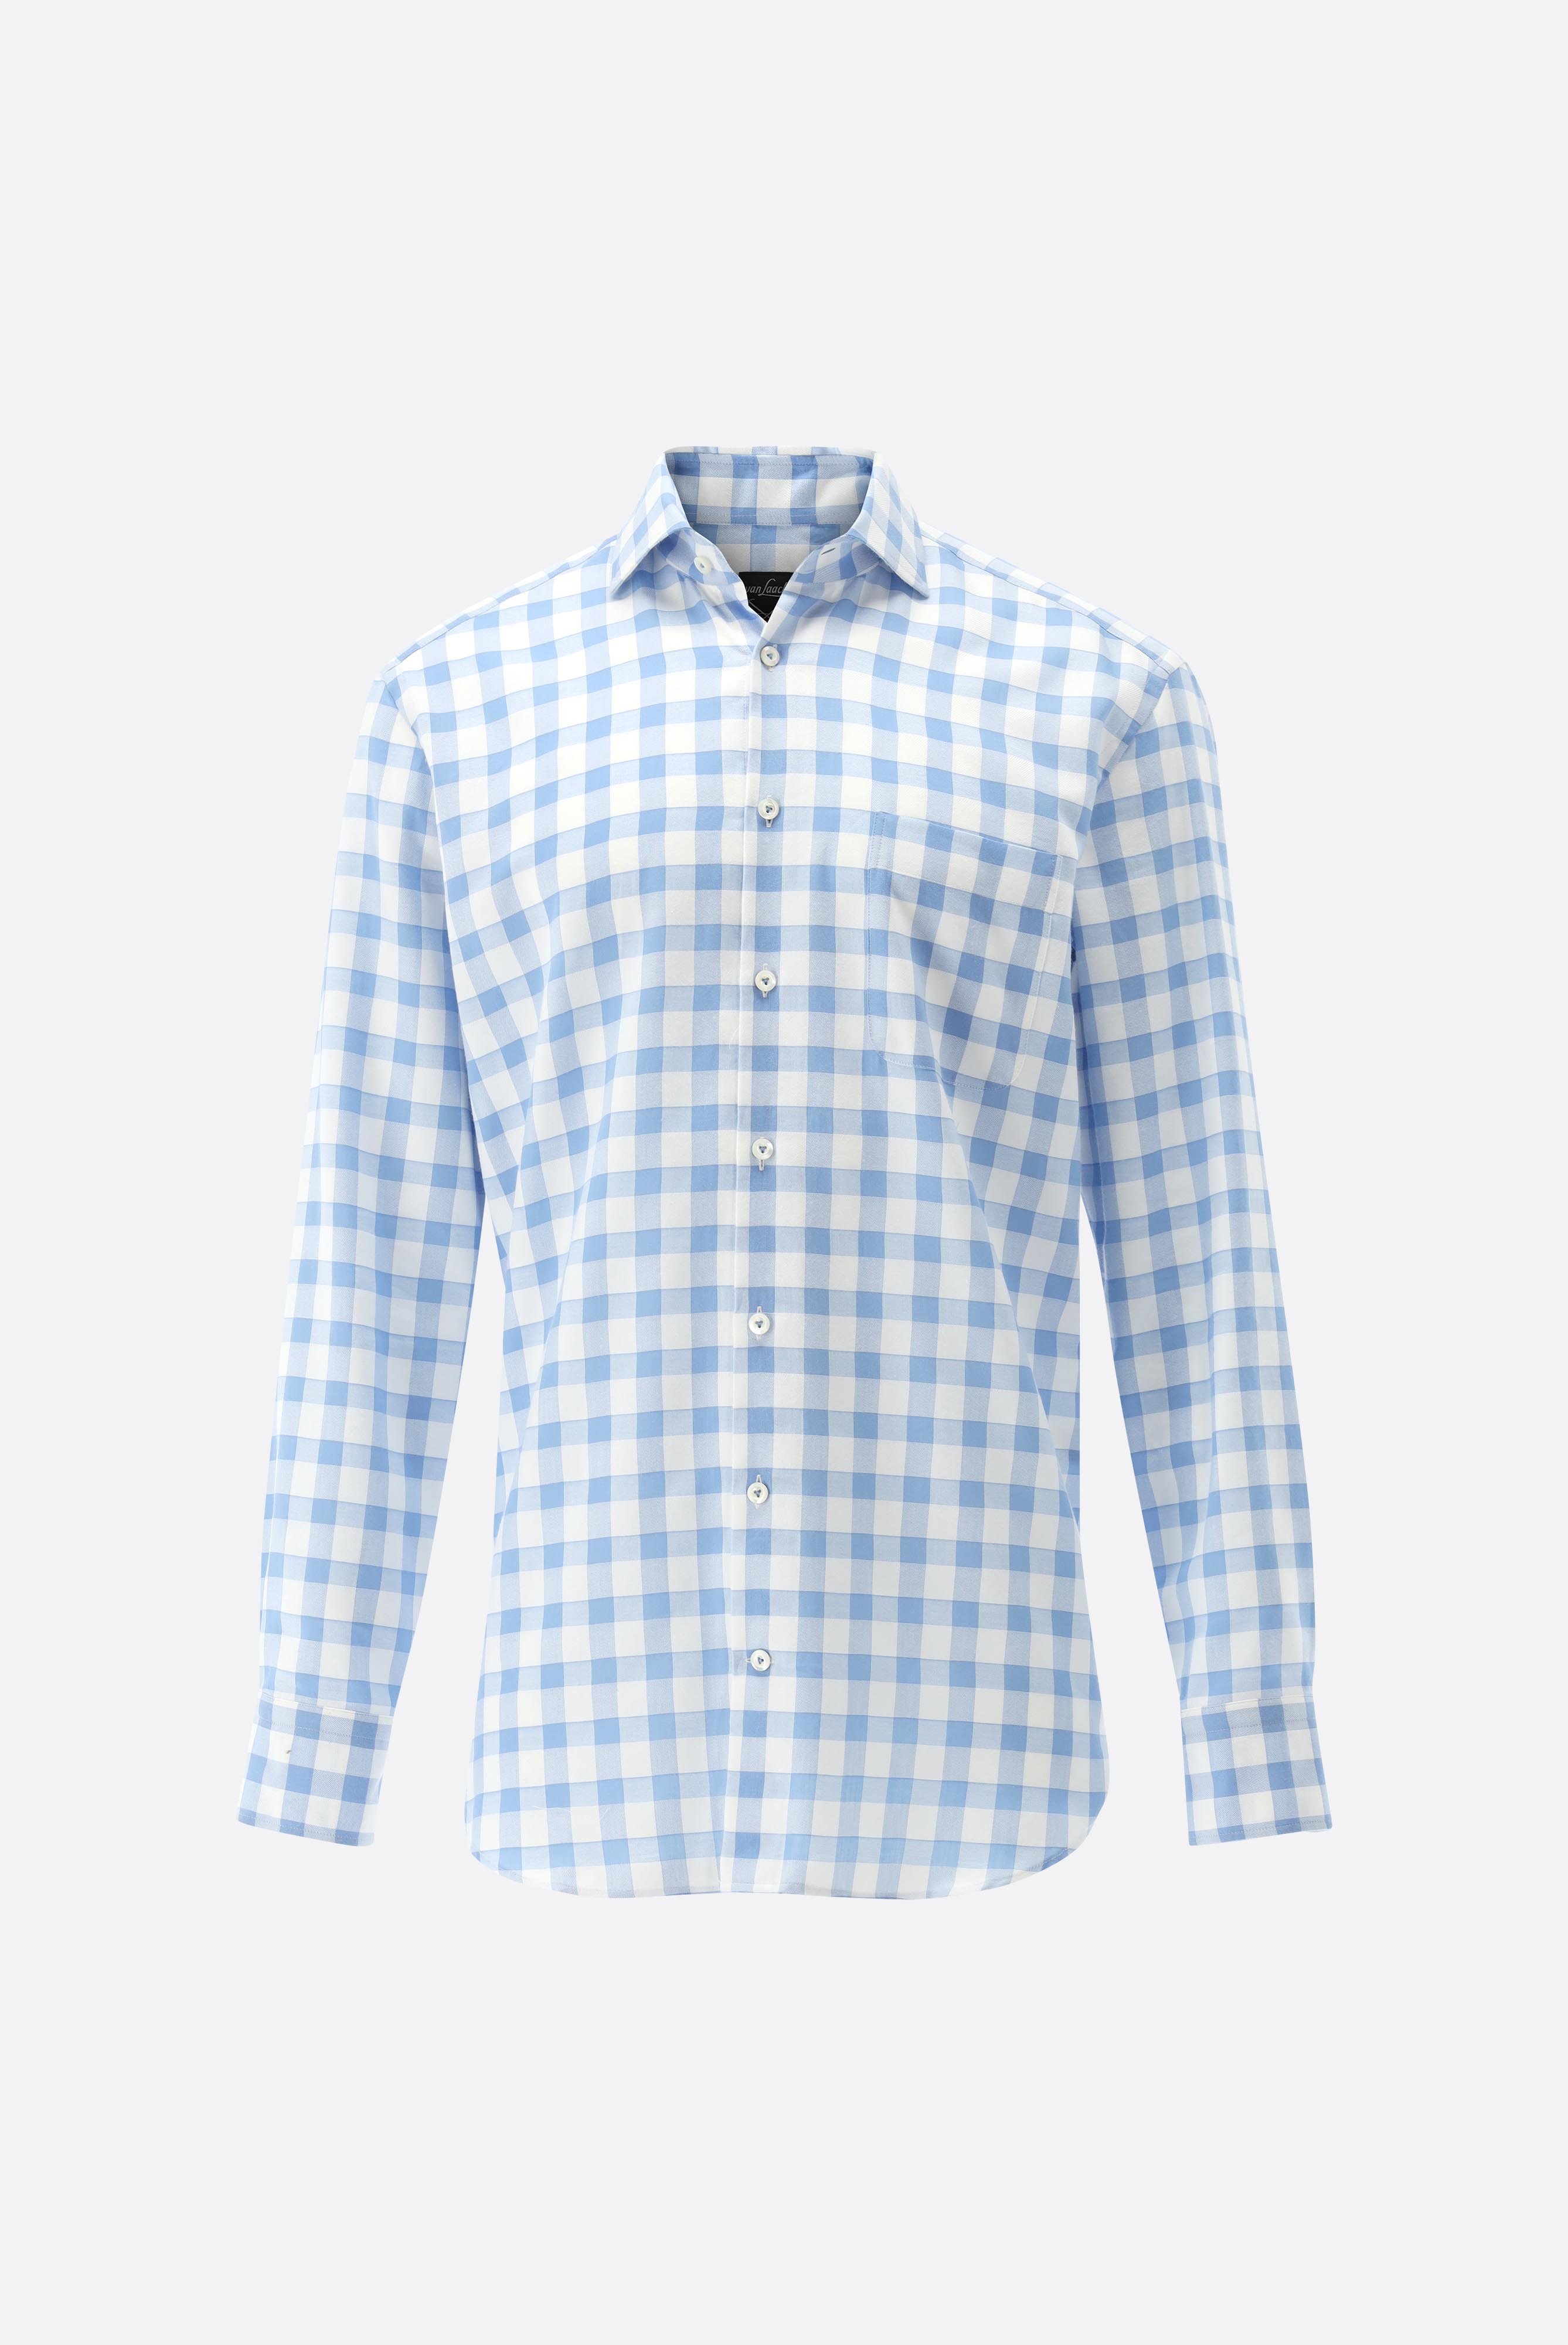 Casual Shirts+Checked twill shirt Comfort Fit+20.2021.AV.151021.720.39